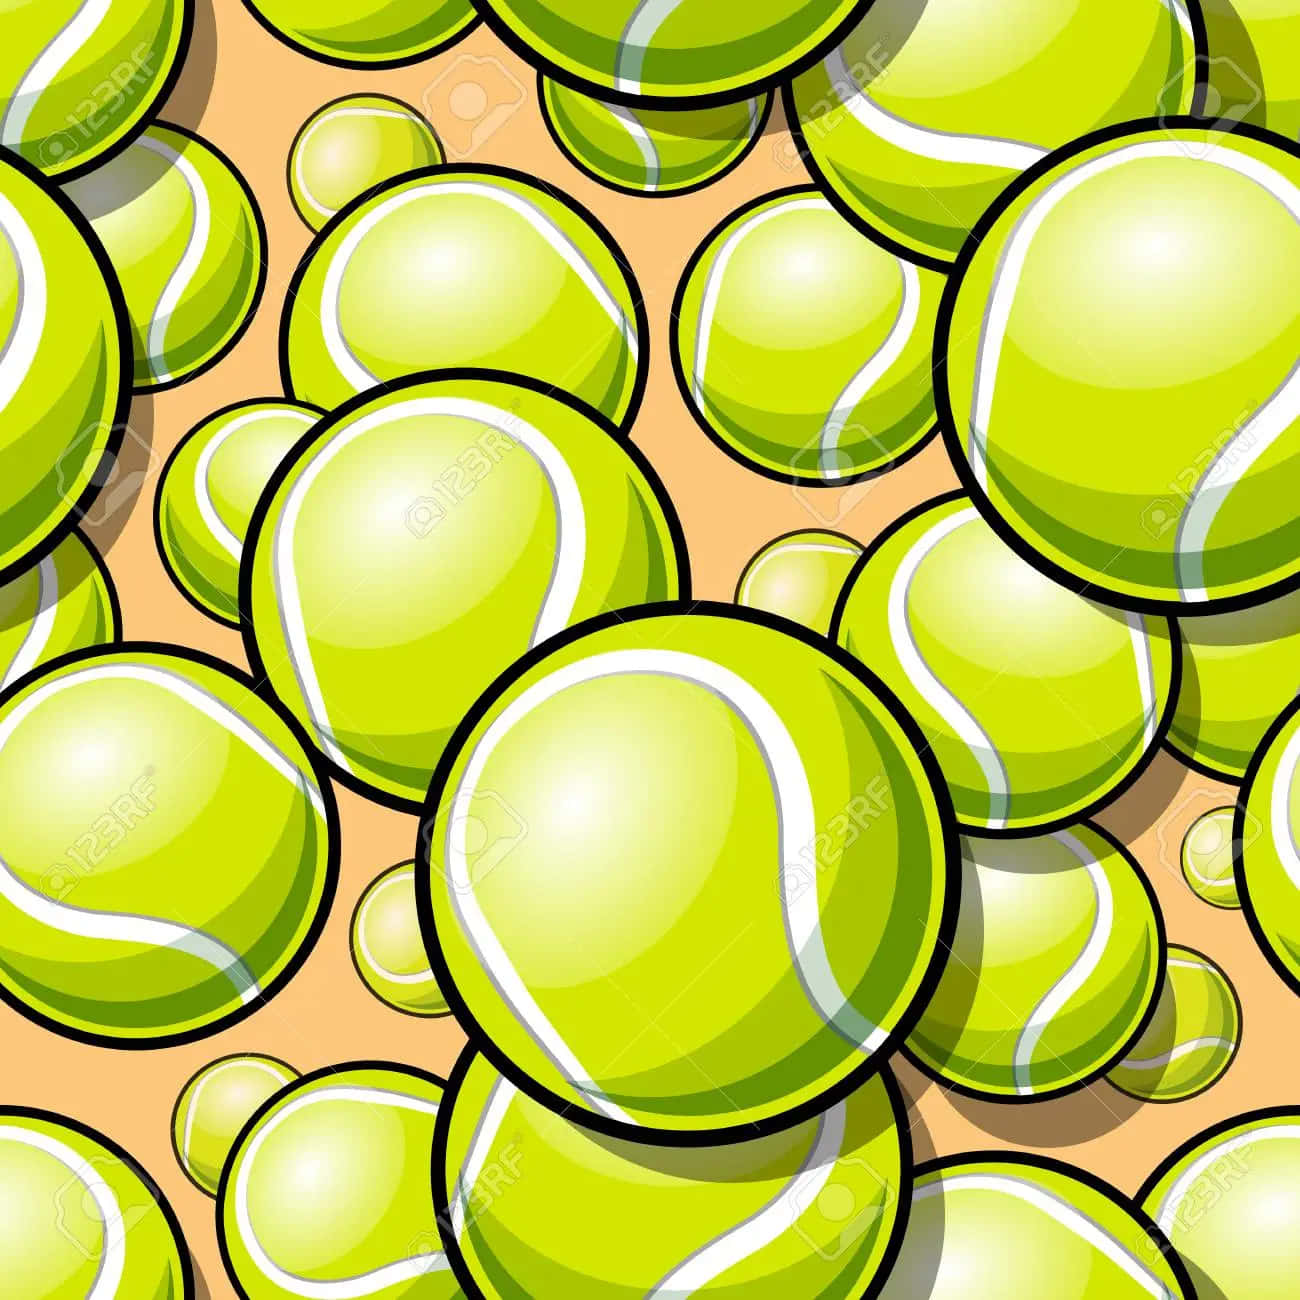 Tennis, Anyone? Wallpaper